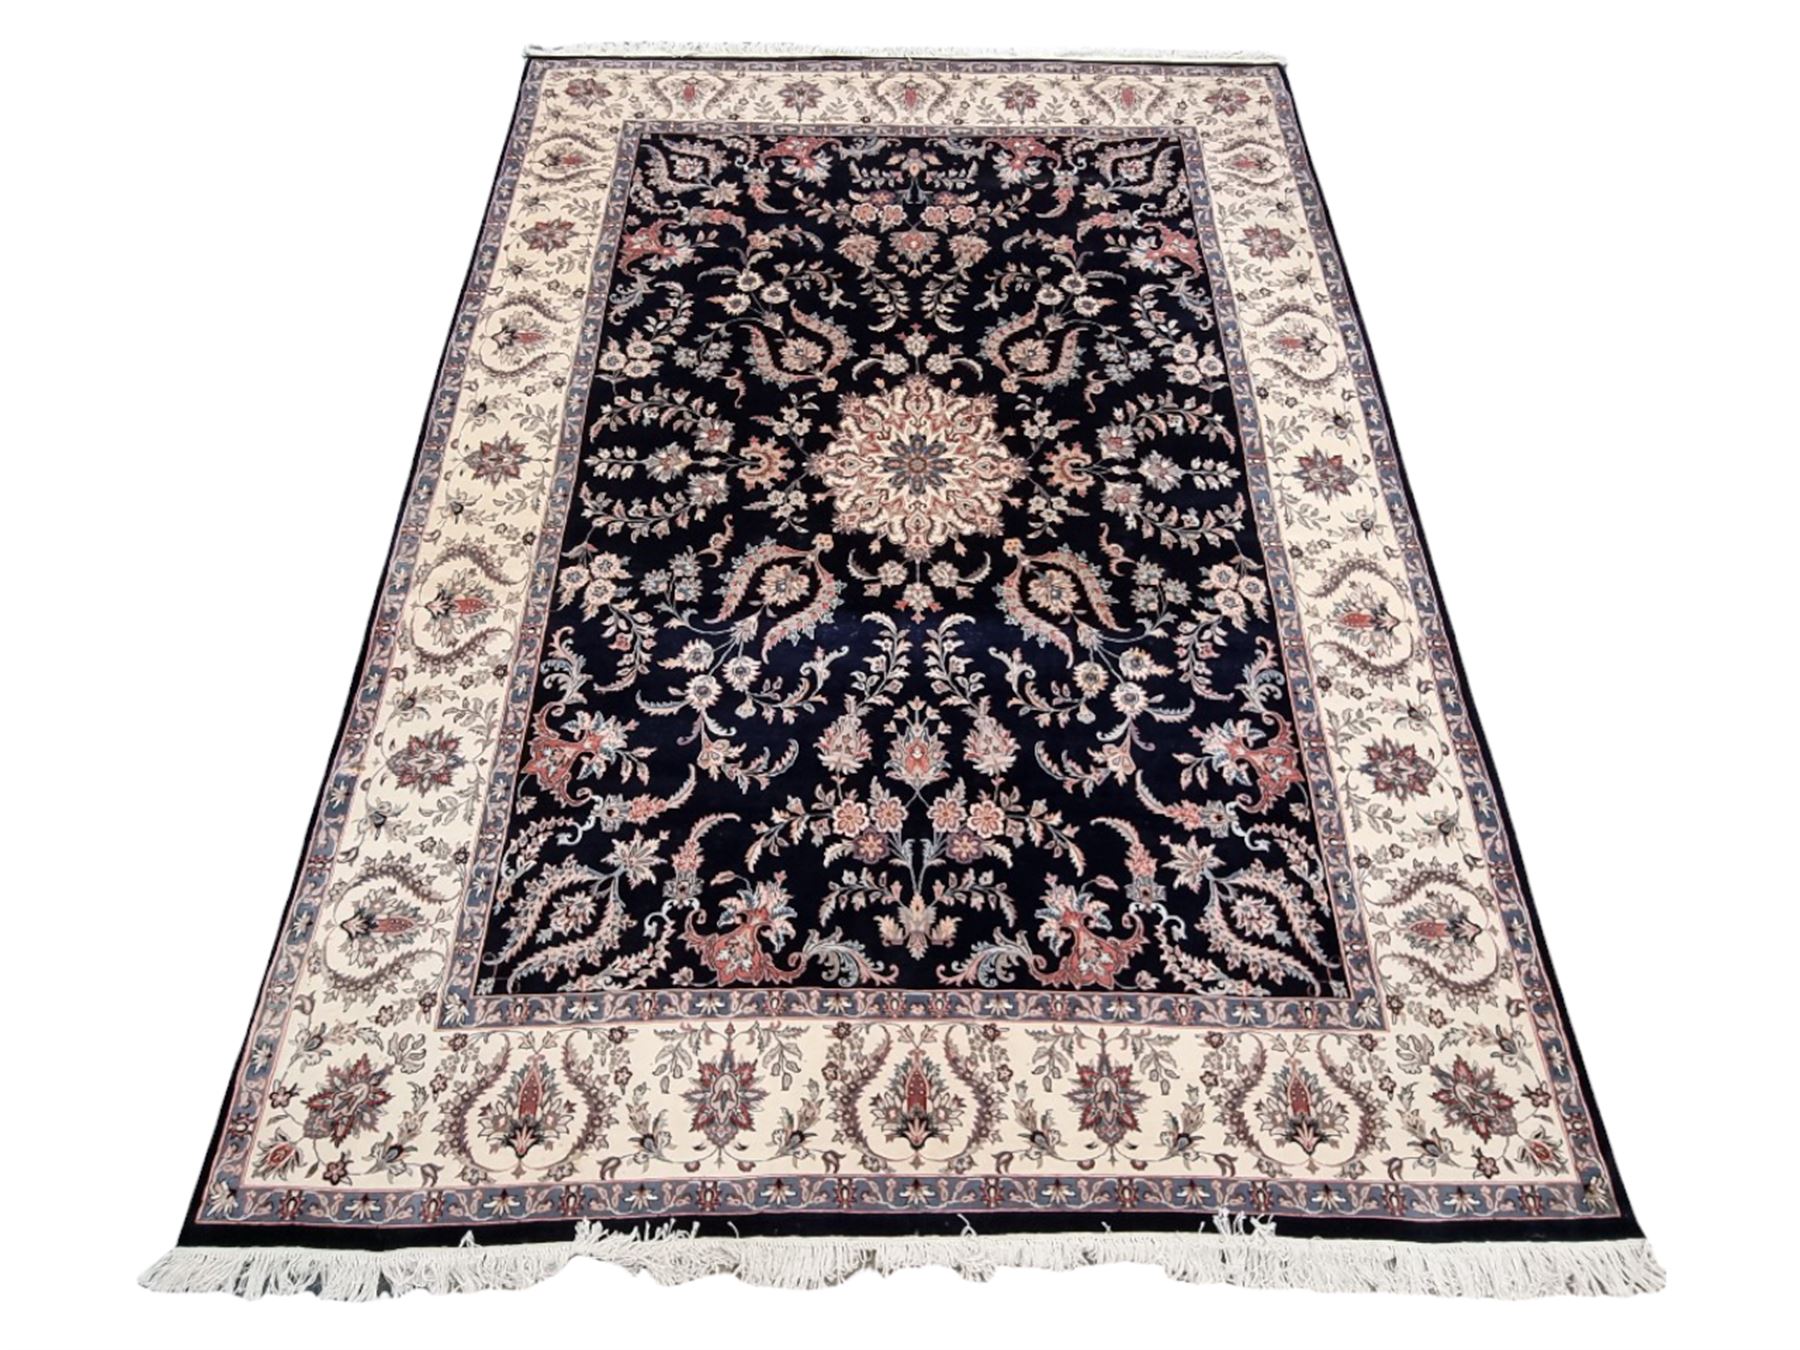 Persian blue ground rug carpet